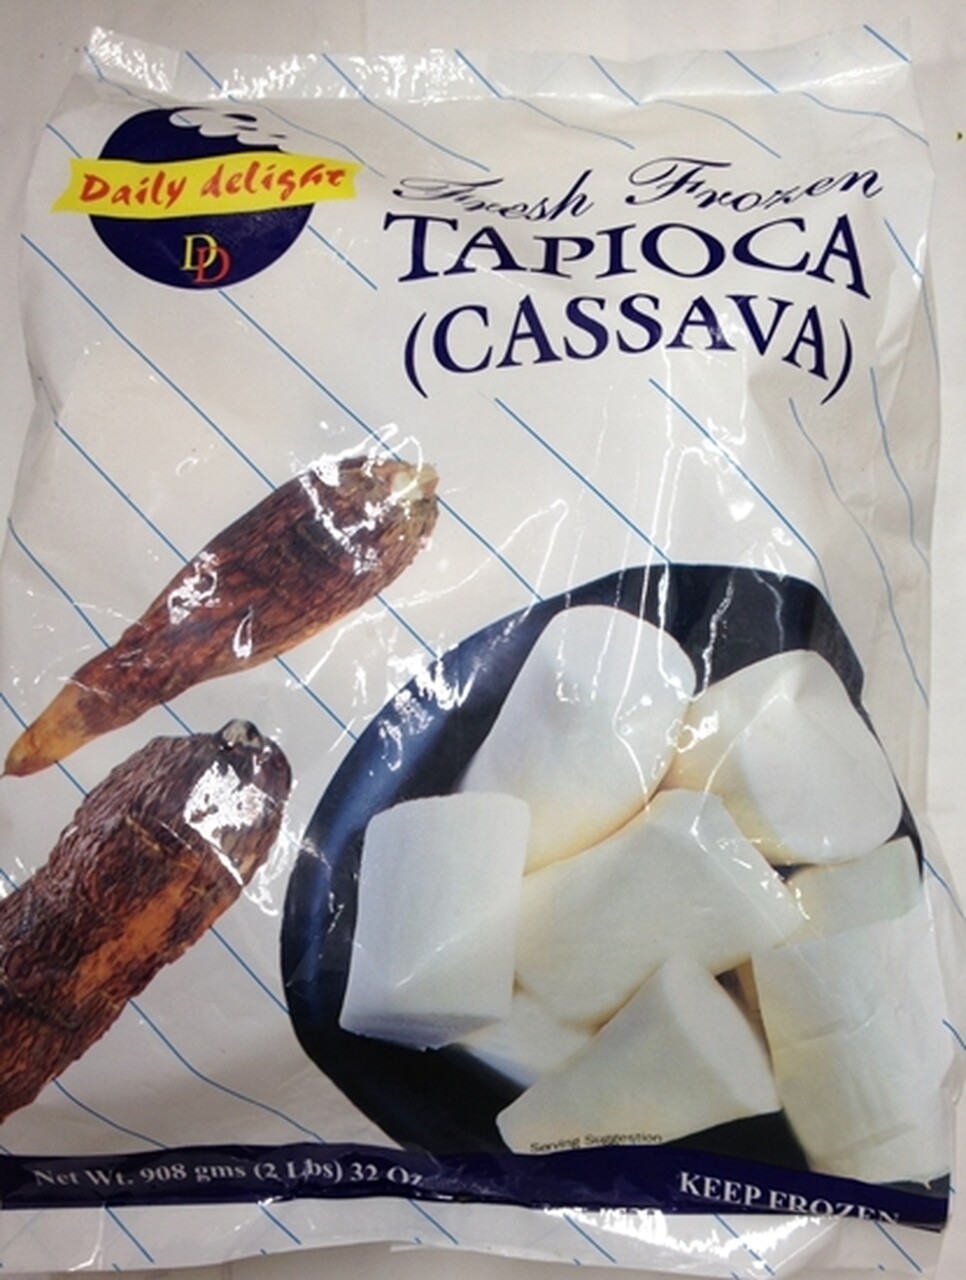 DD TAPIOCA (CASSAVA)